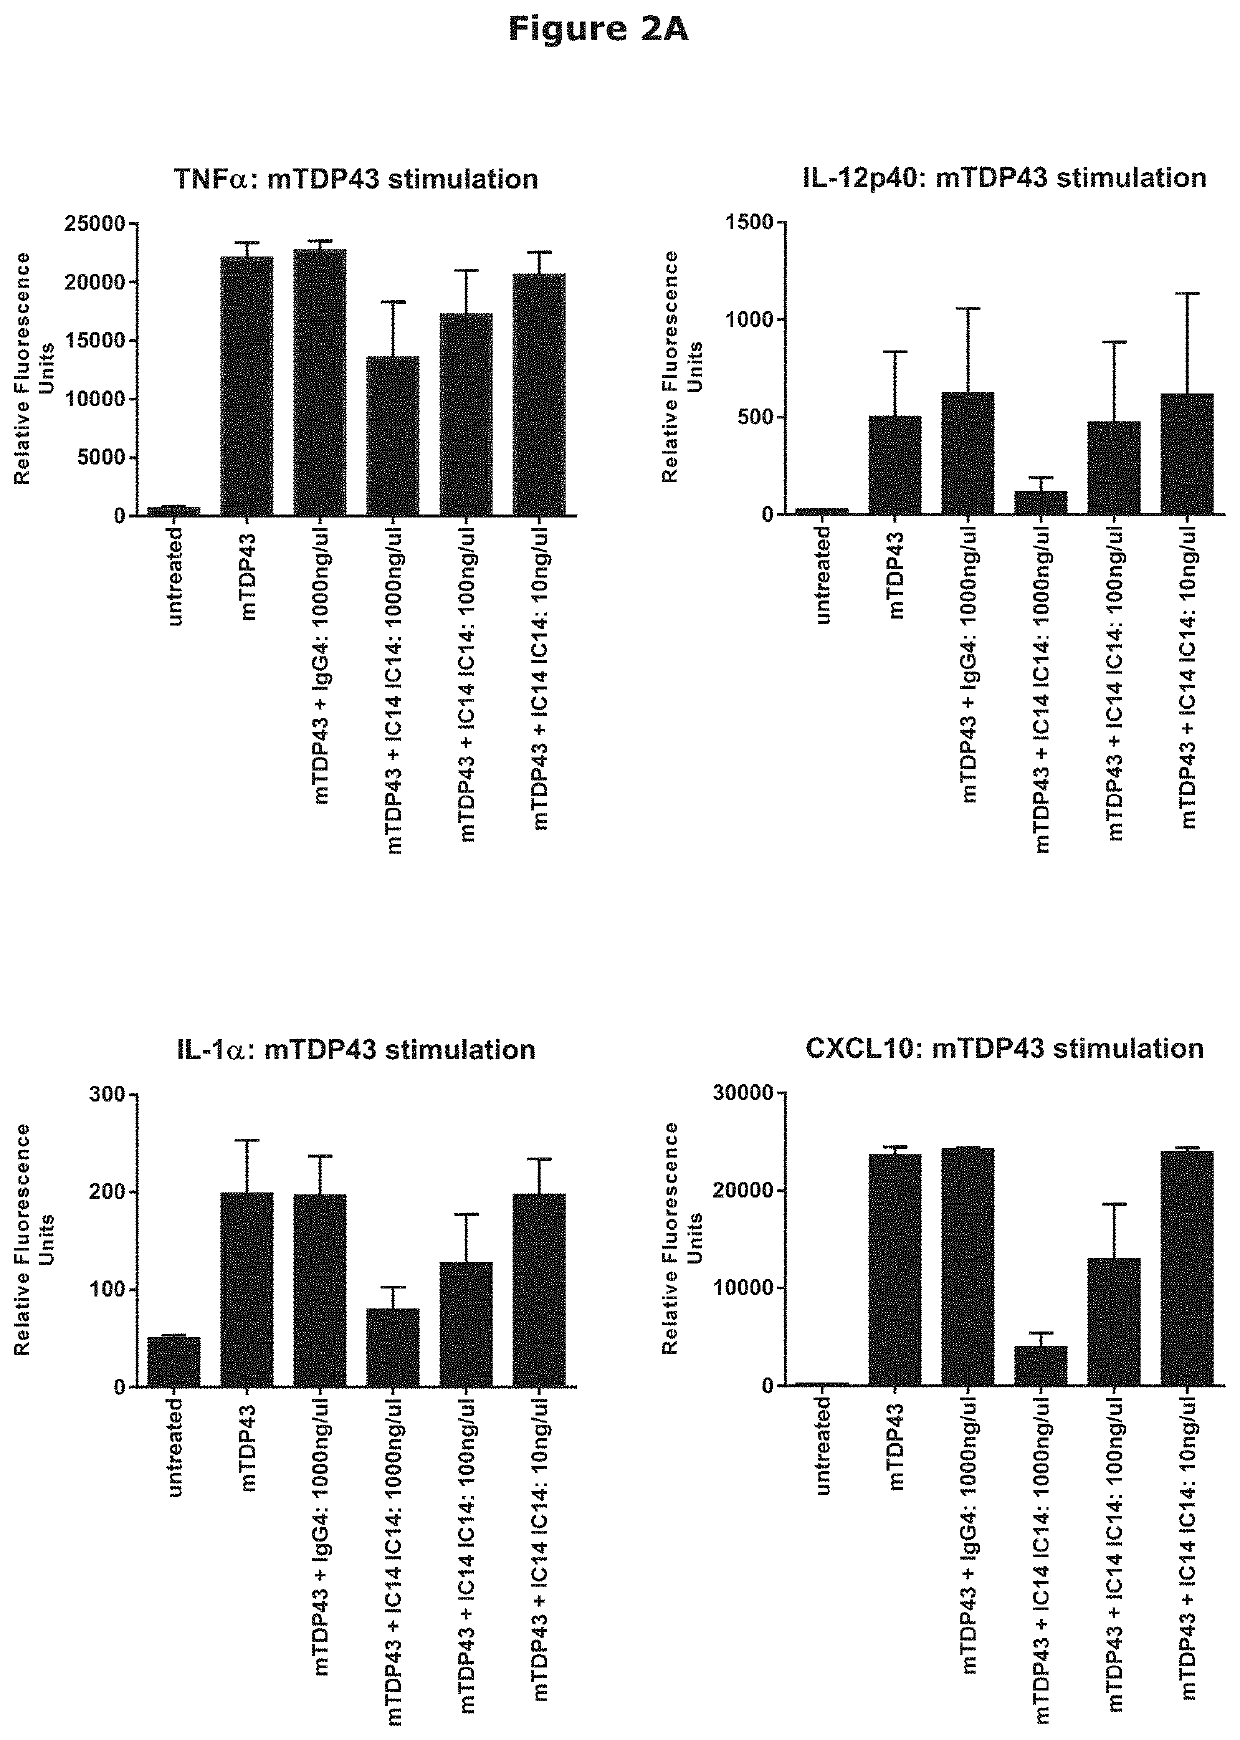 Cd14 antagonist antibodies for treating neurodegenerative diseases